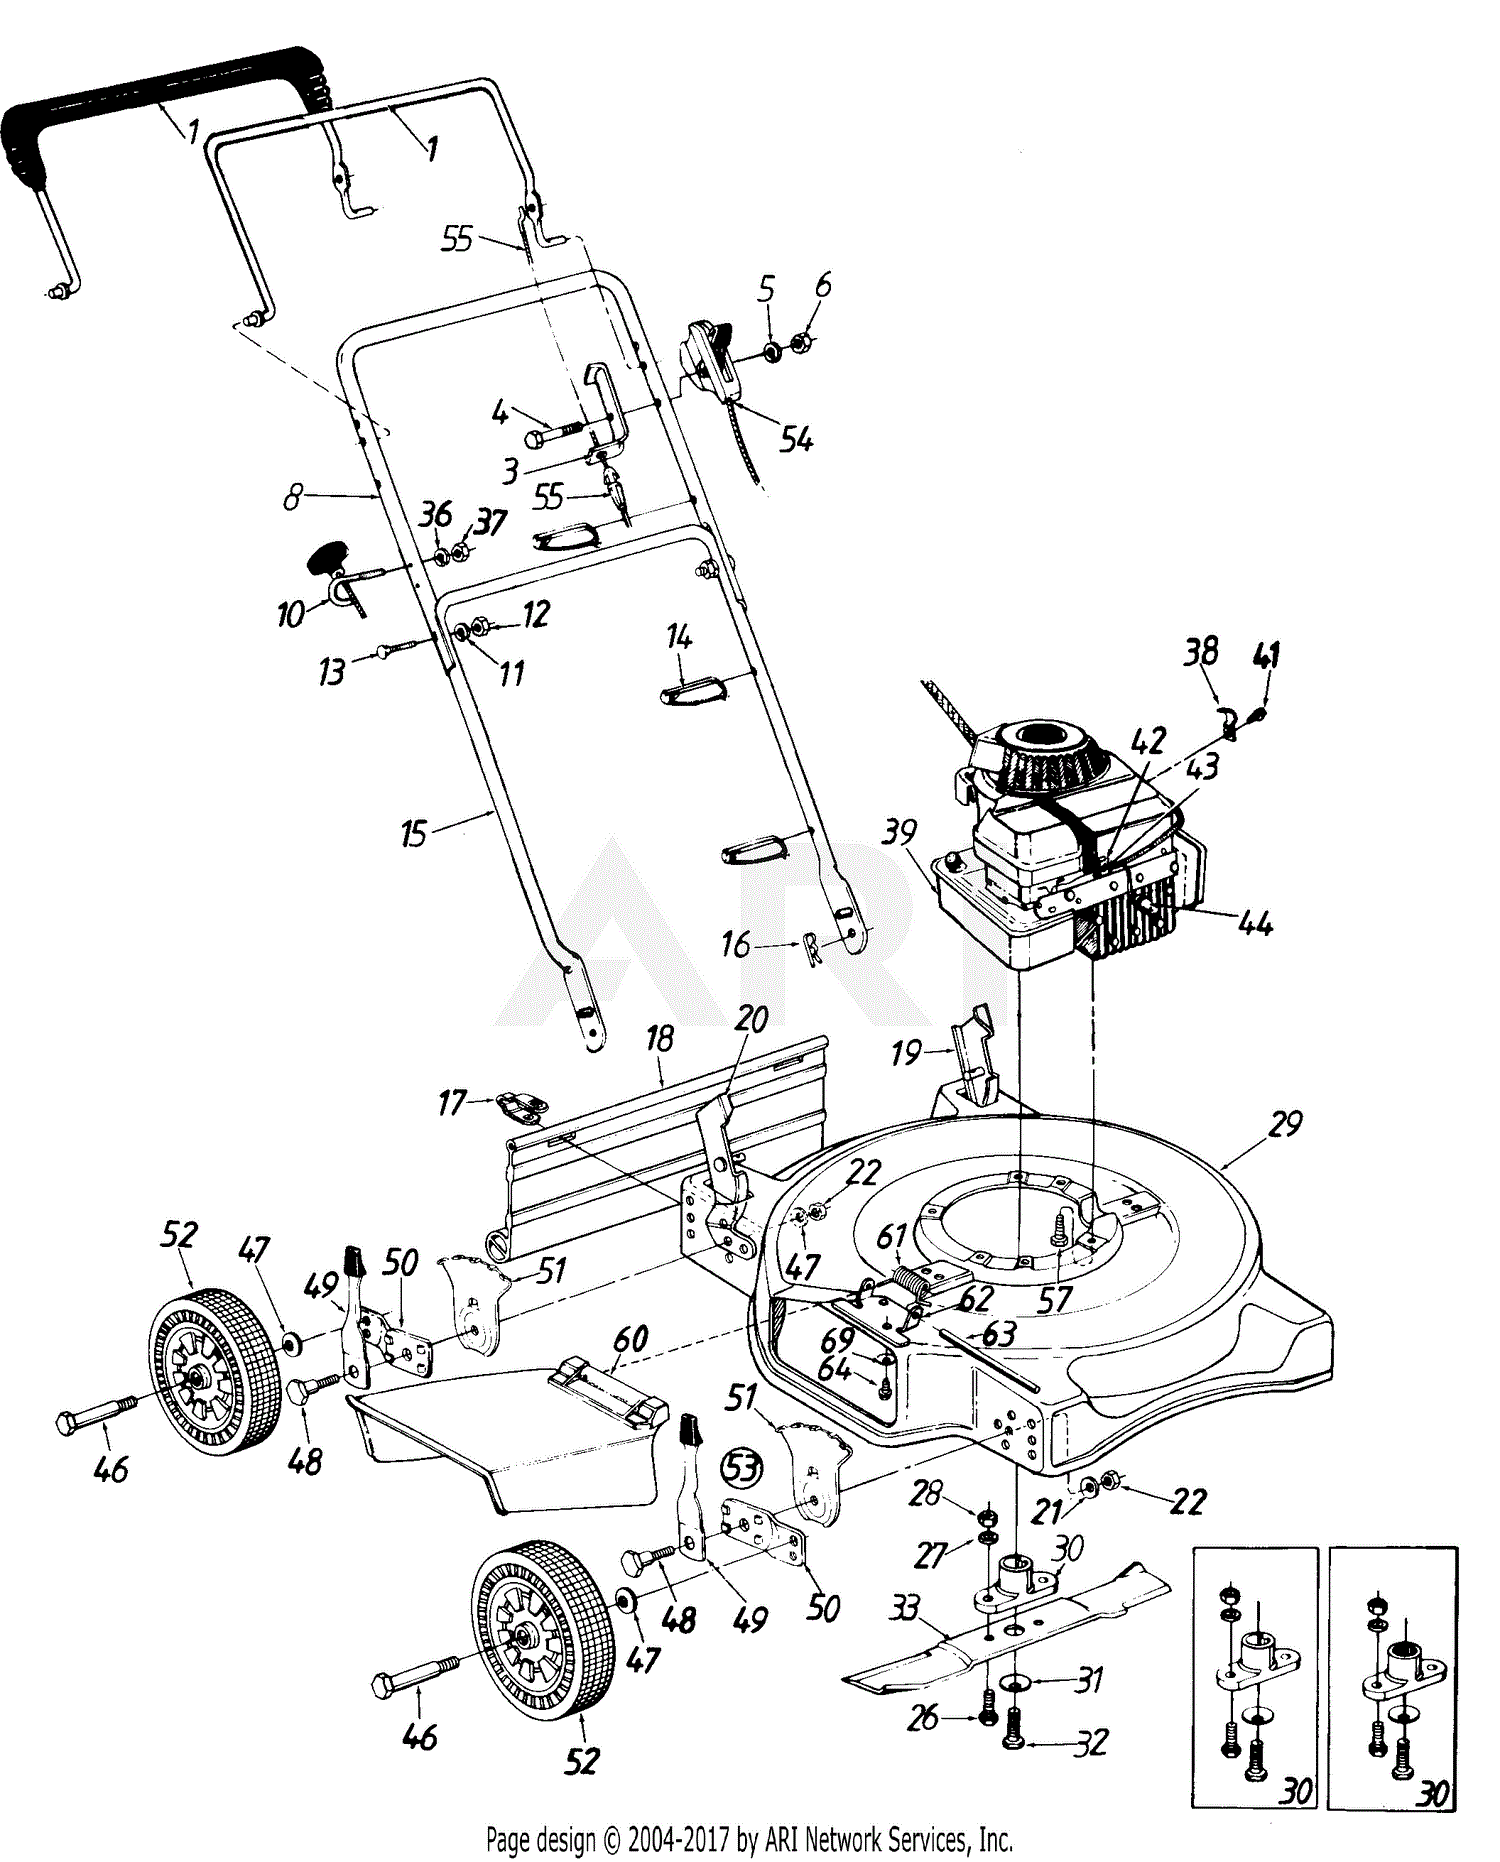 34 Mtd Yardman Parts Diagram - Wire Diagram Source Information